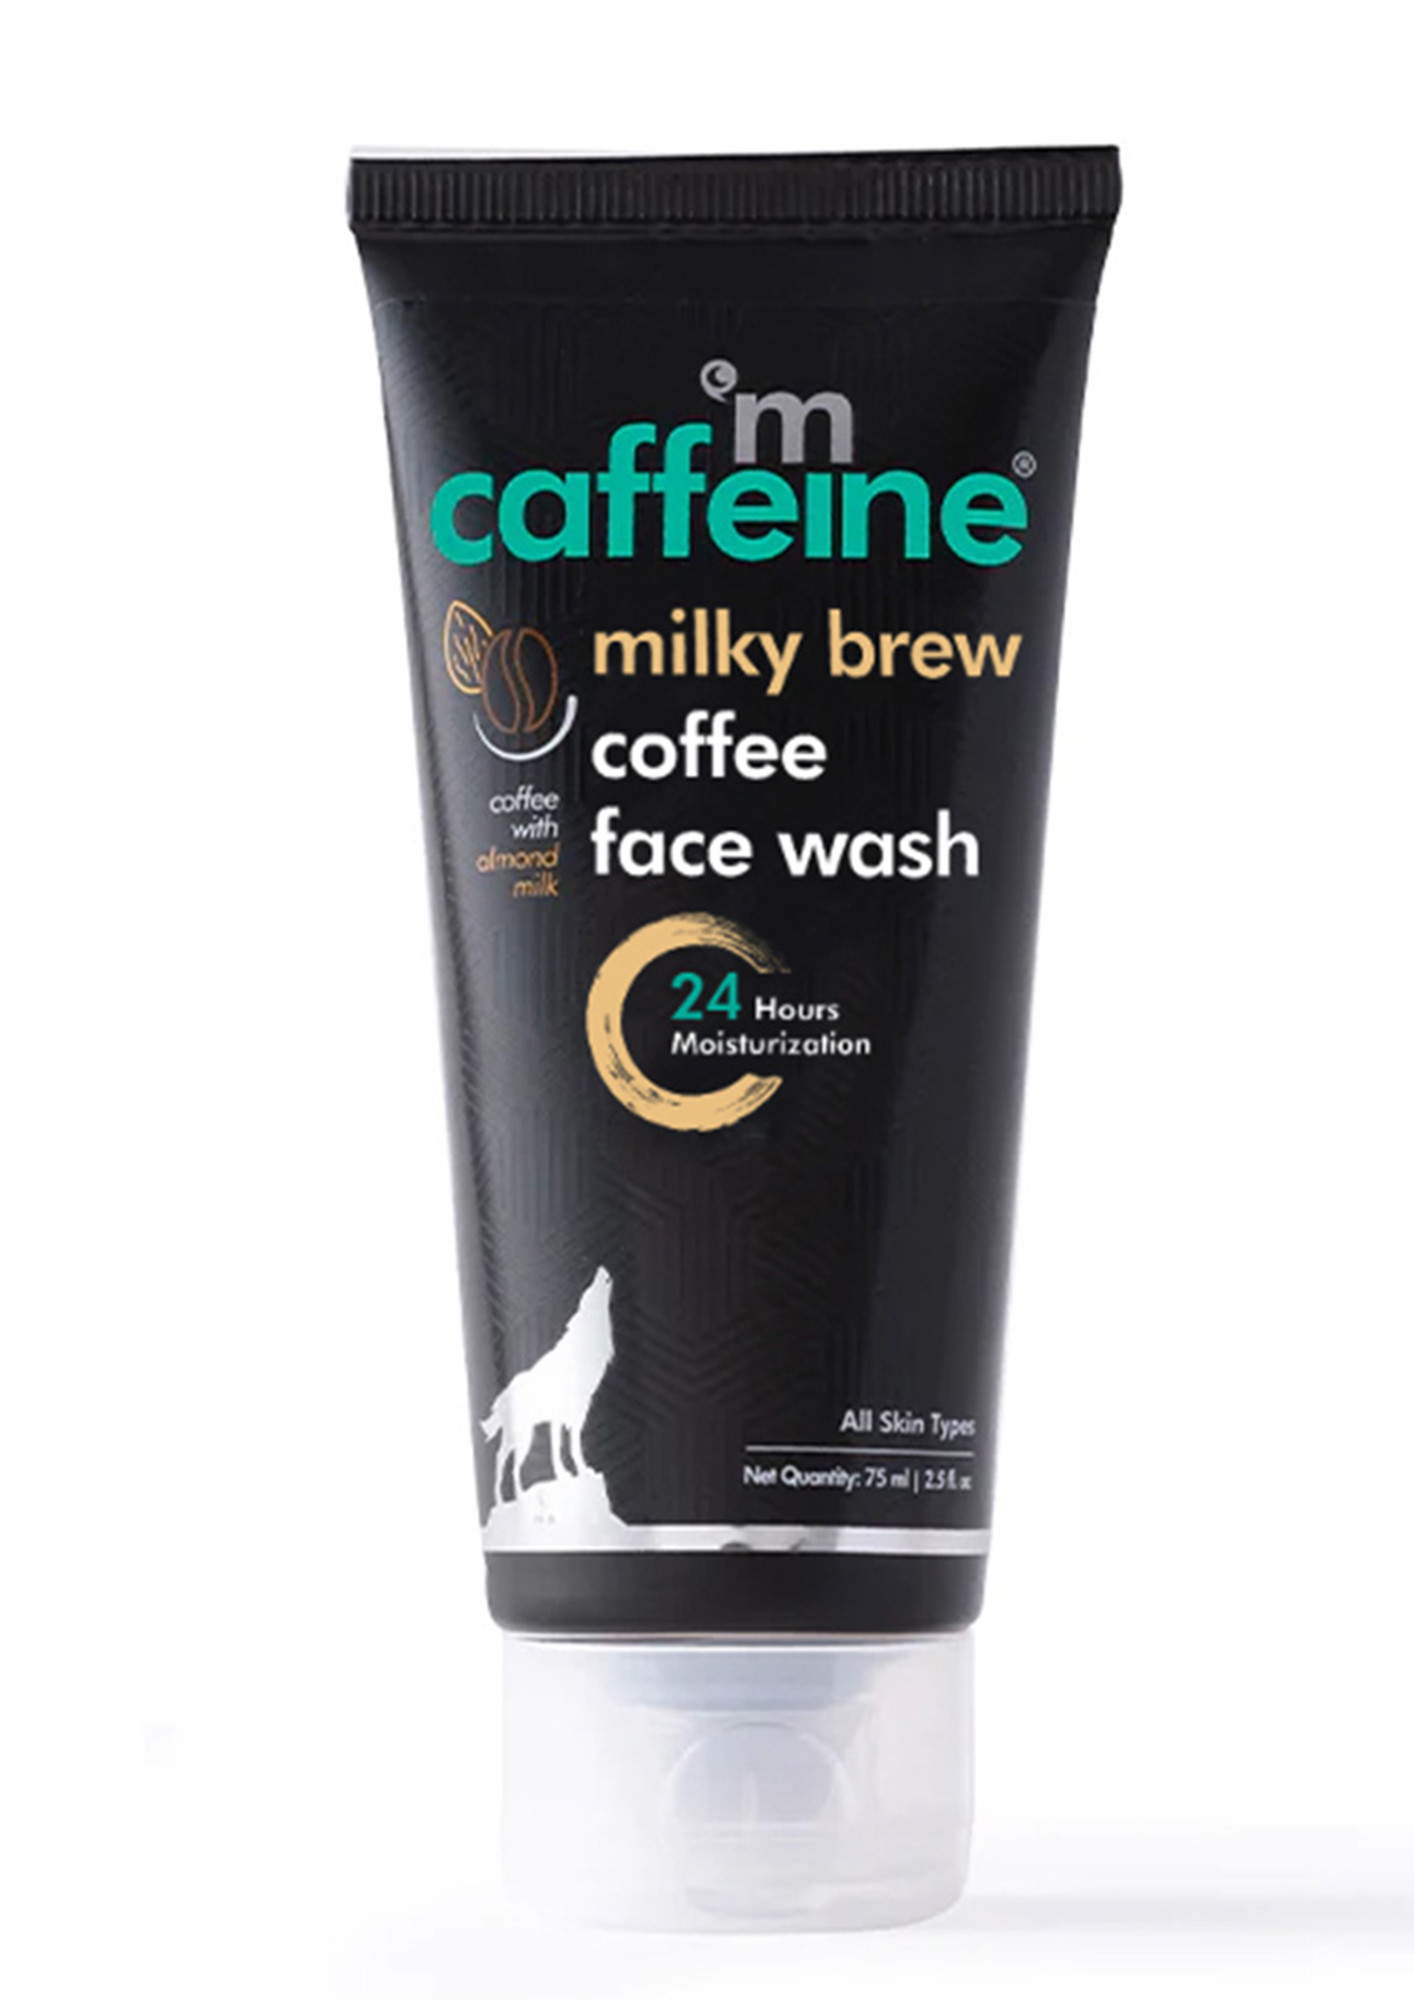 MCaffeine Coffee & Milk Face Wash for 24Hr Moisturization - Soap Free Cleanser with Shea Butter & Almond Milk